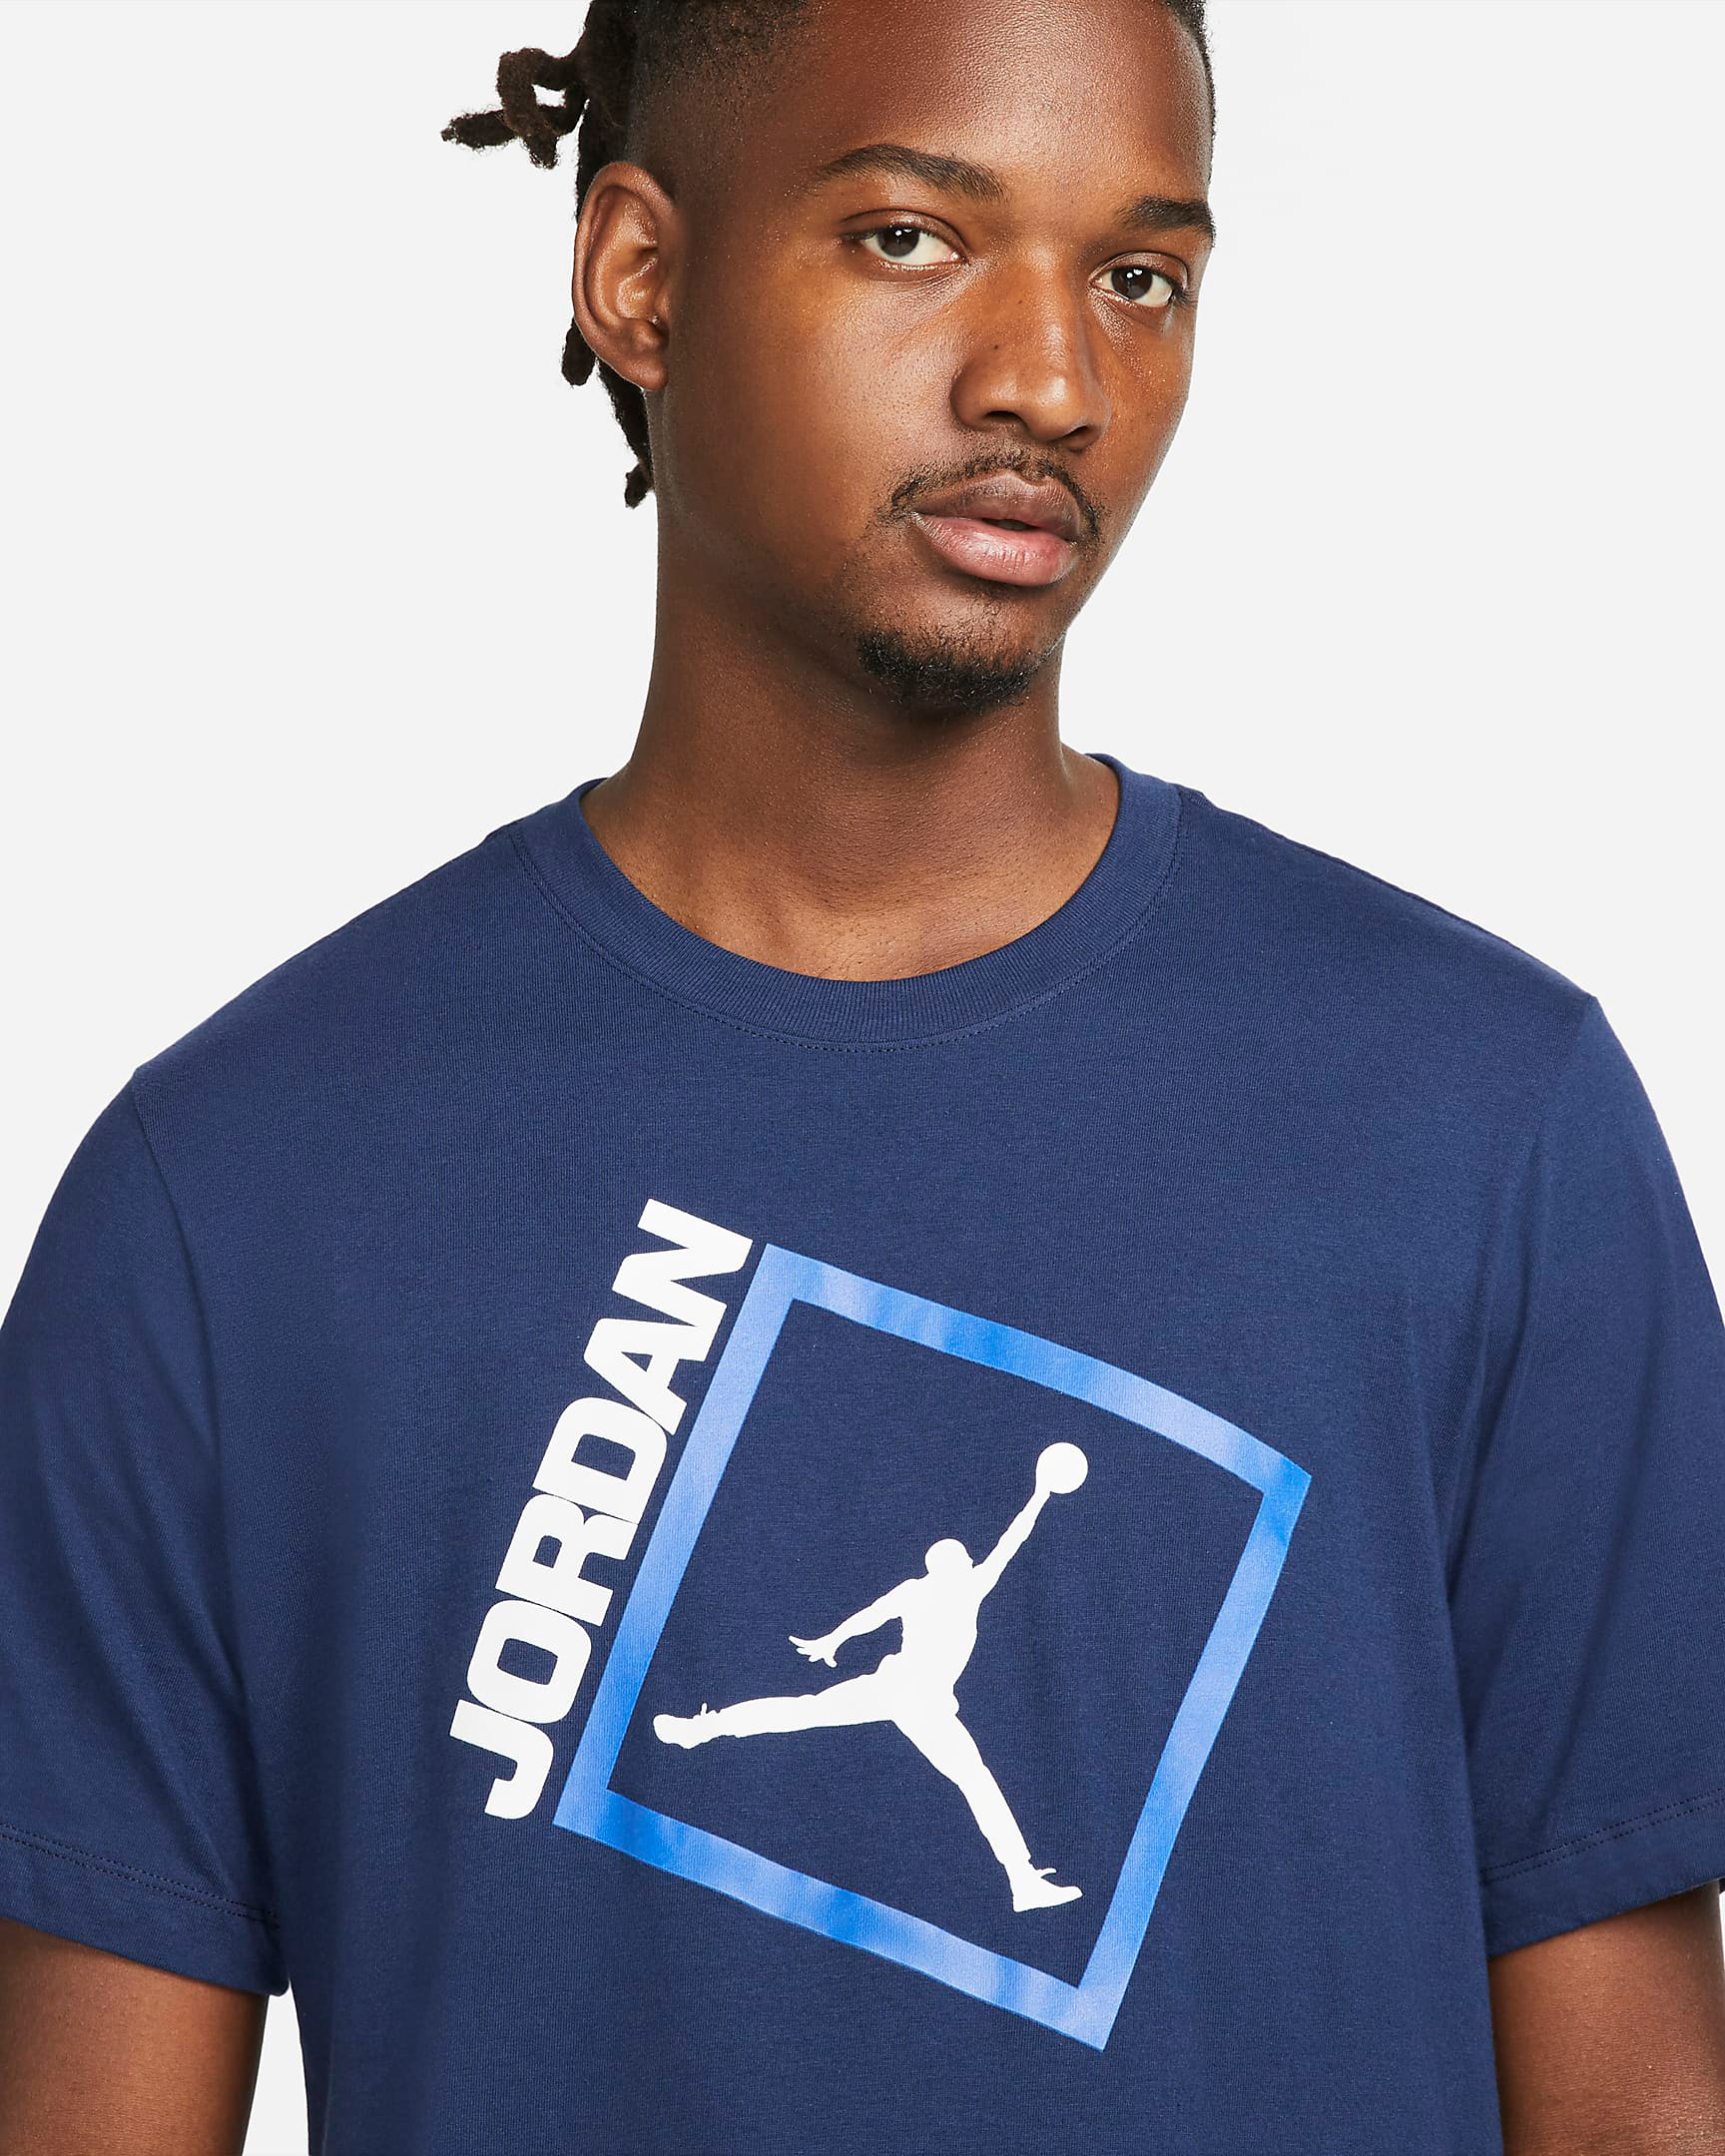 Air Jordan 1 AJKO Storm Blue Shirts Hats Clothing Outfits